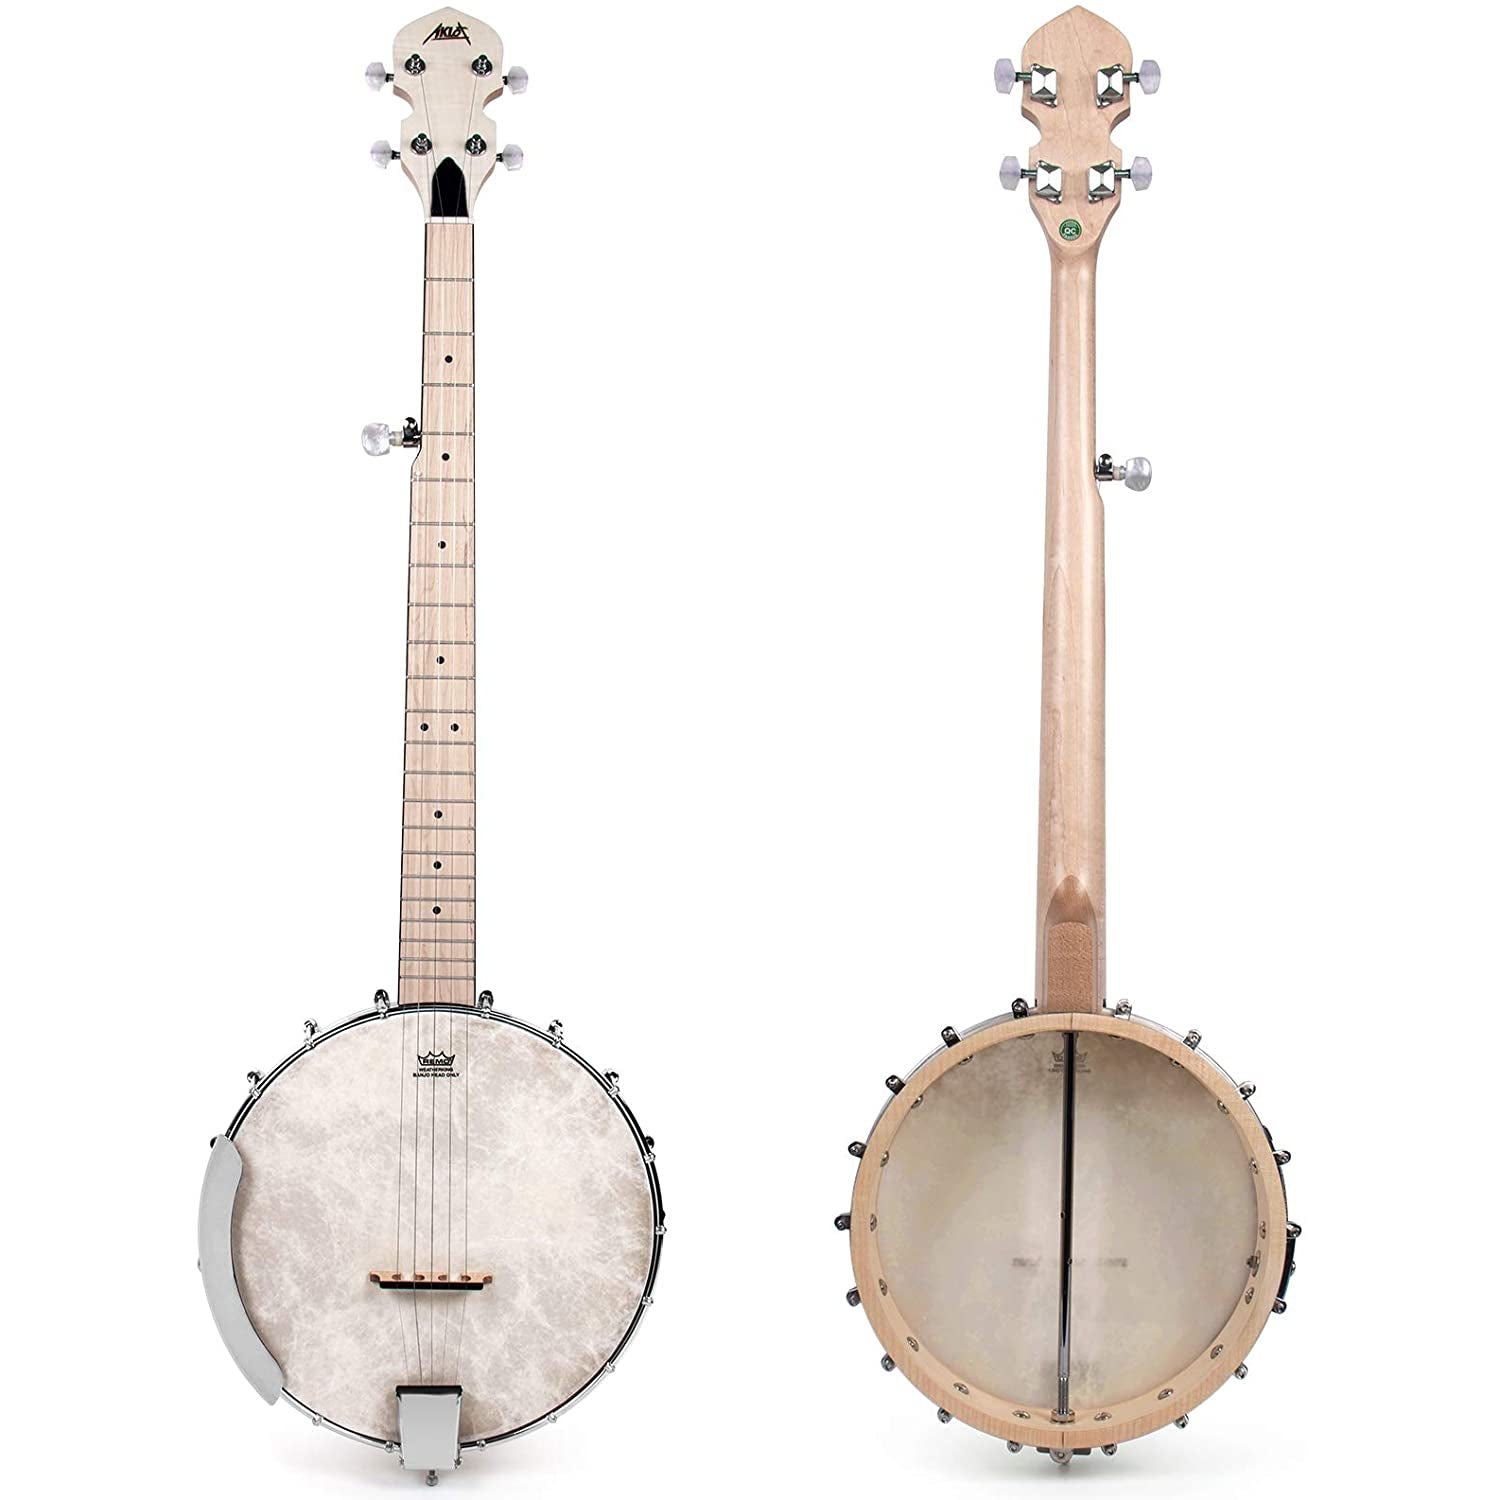 AKLOT 5 String Banjo - Wood / White